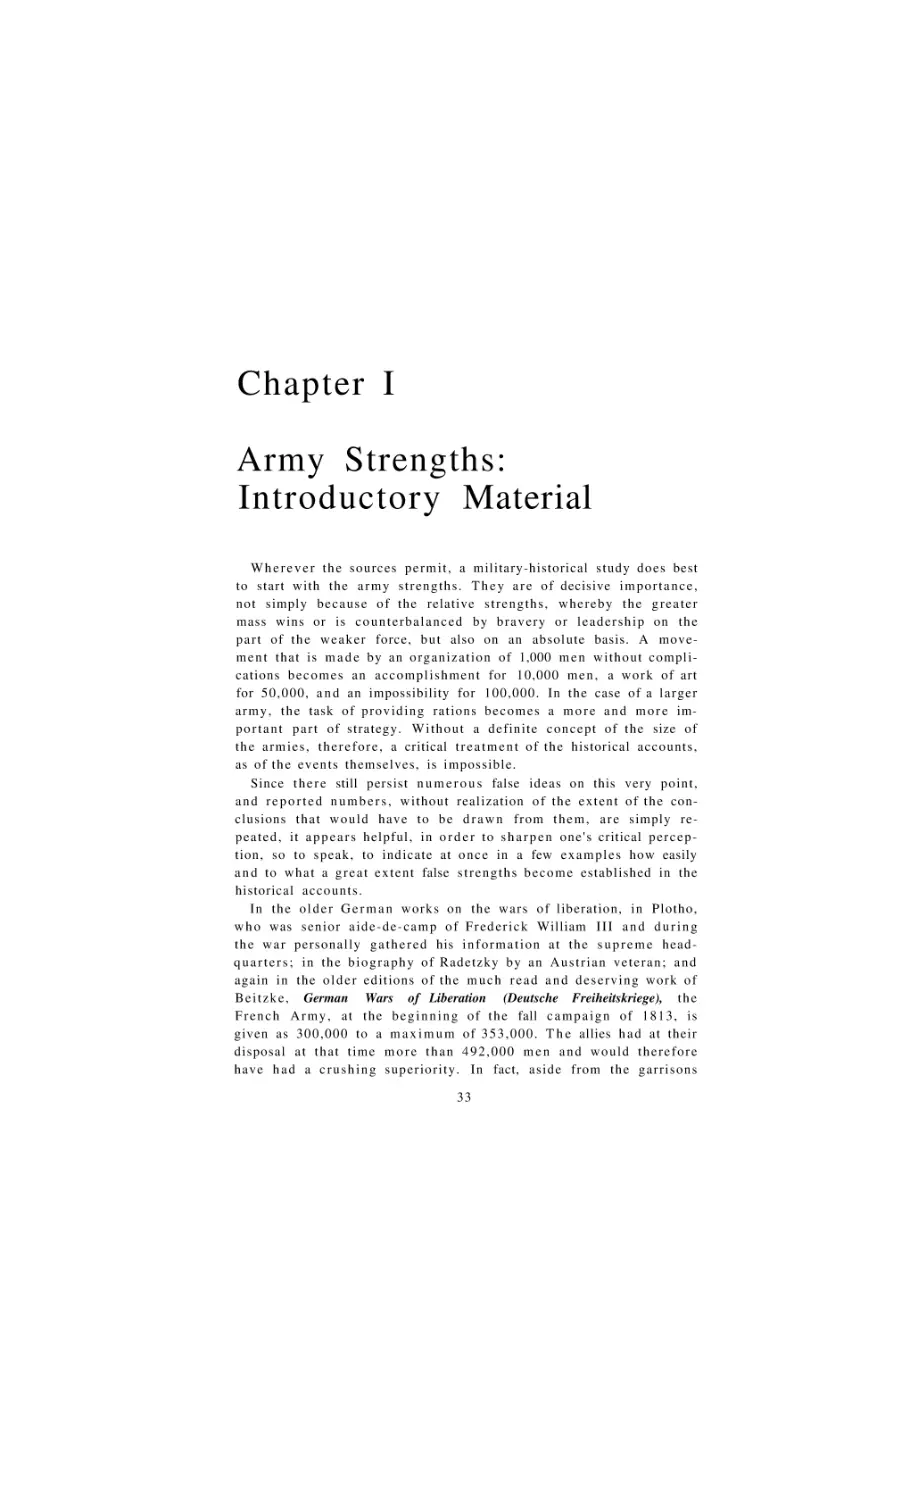 Army Strengths